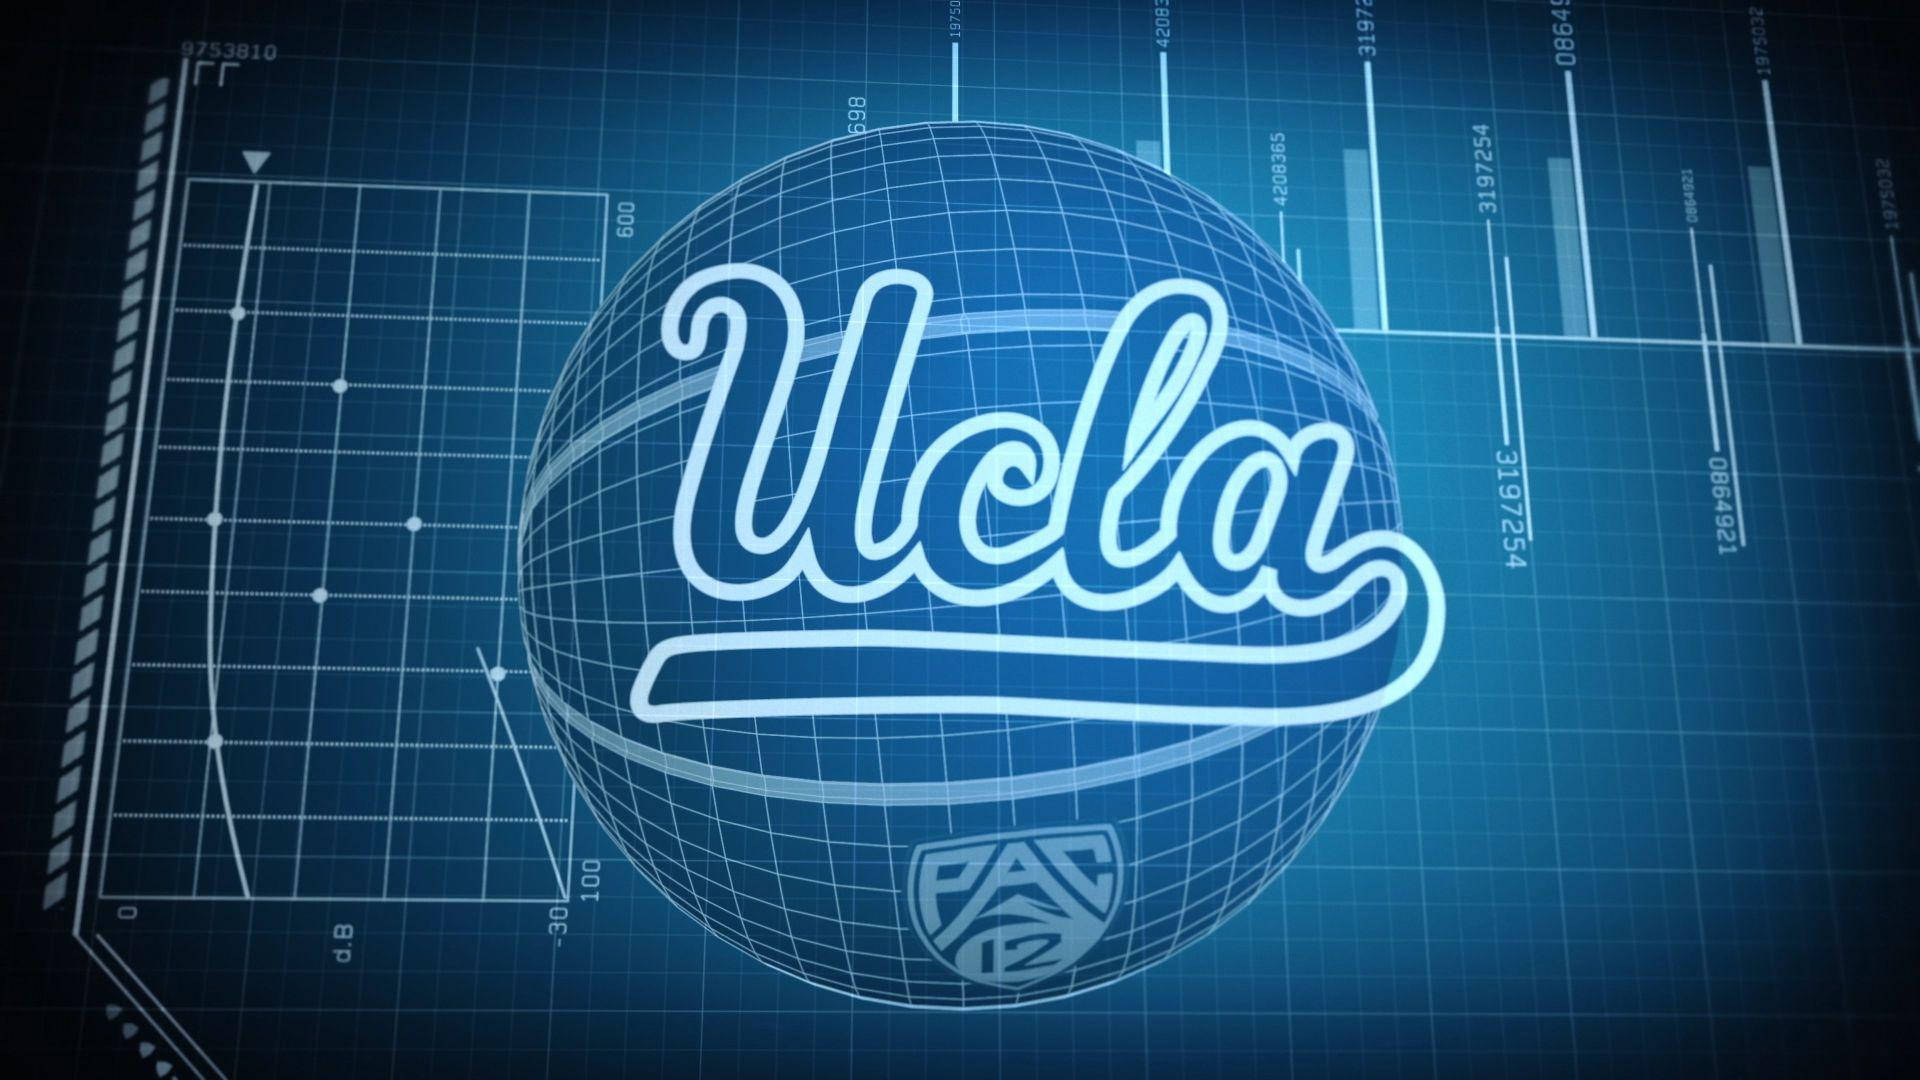 UCLA Bruins Basketball Team in Action Under Blue Lights Wallpaper